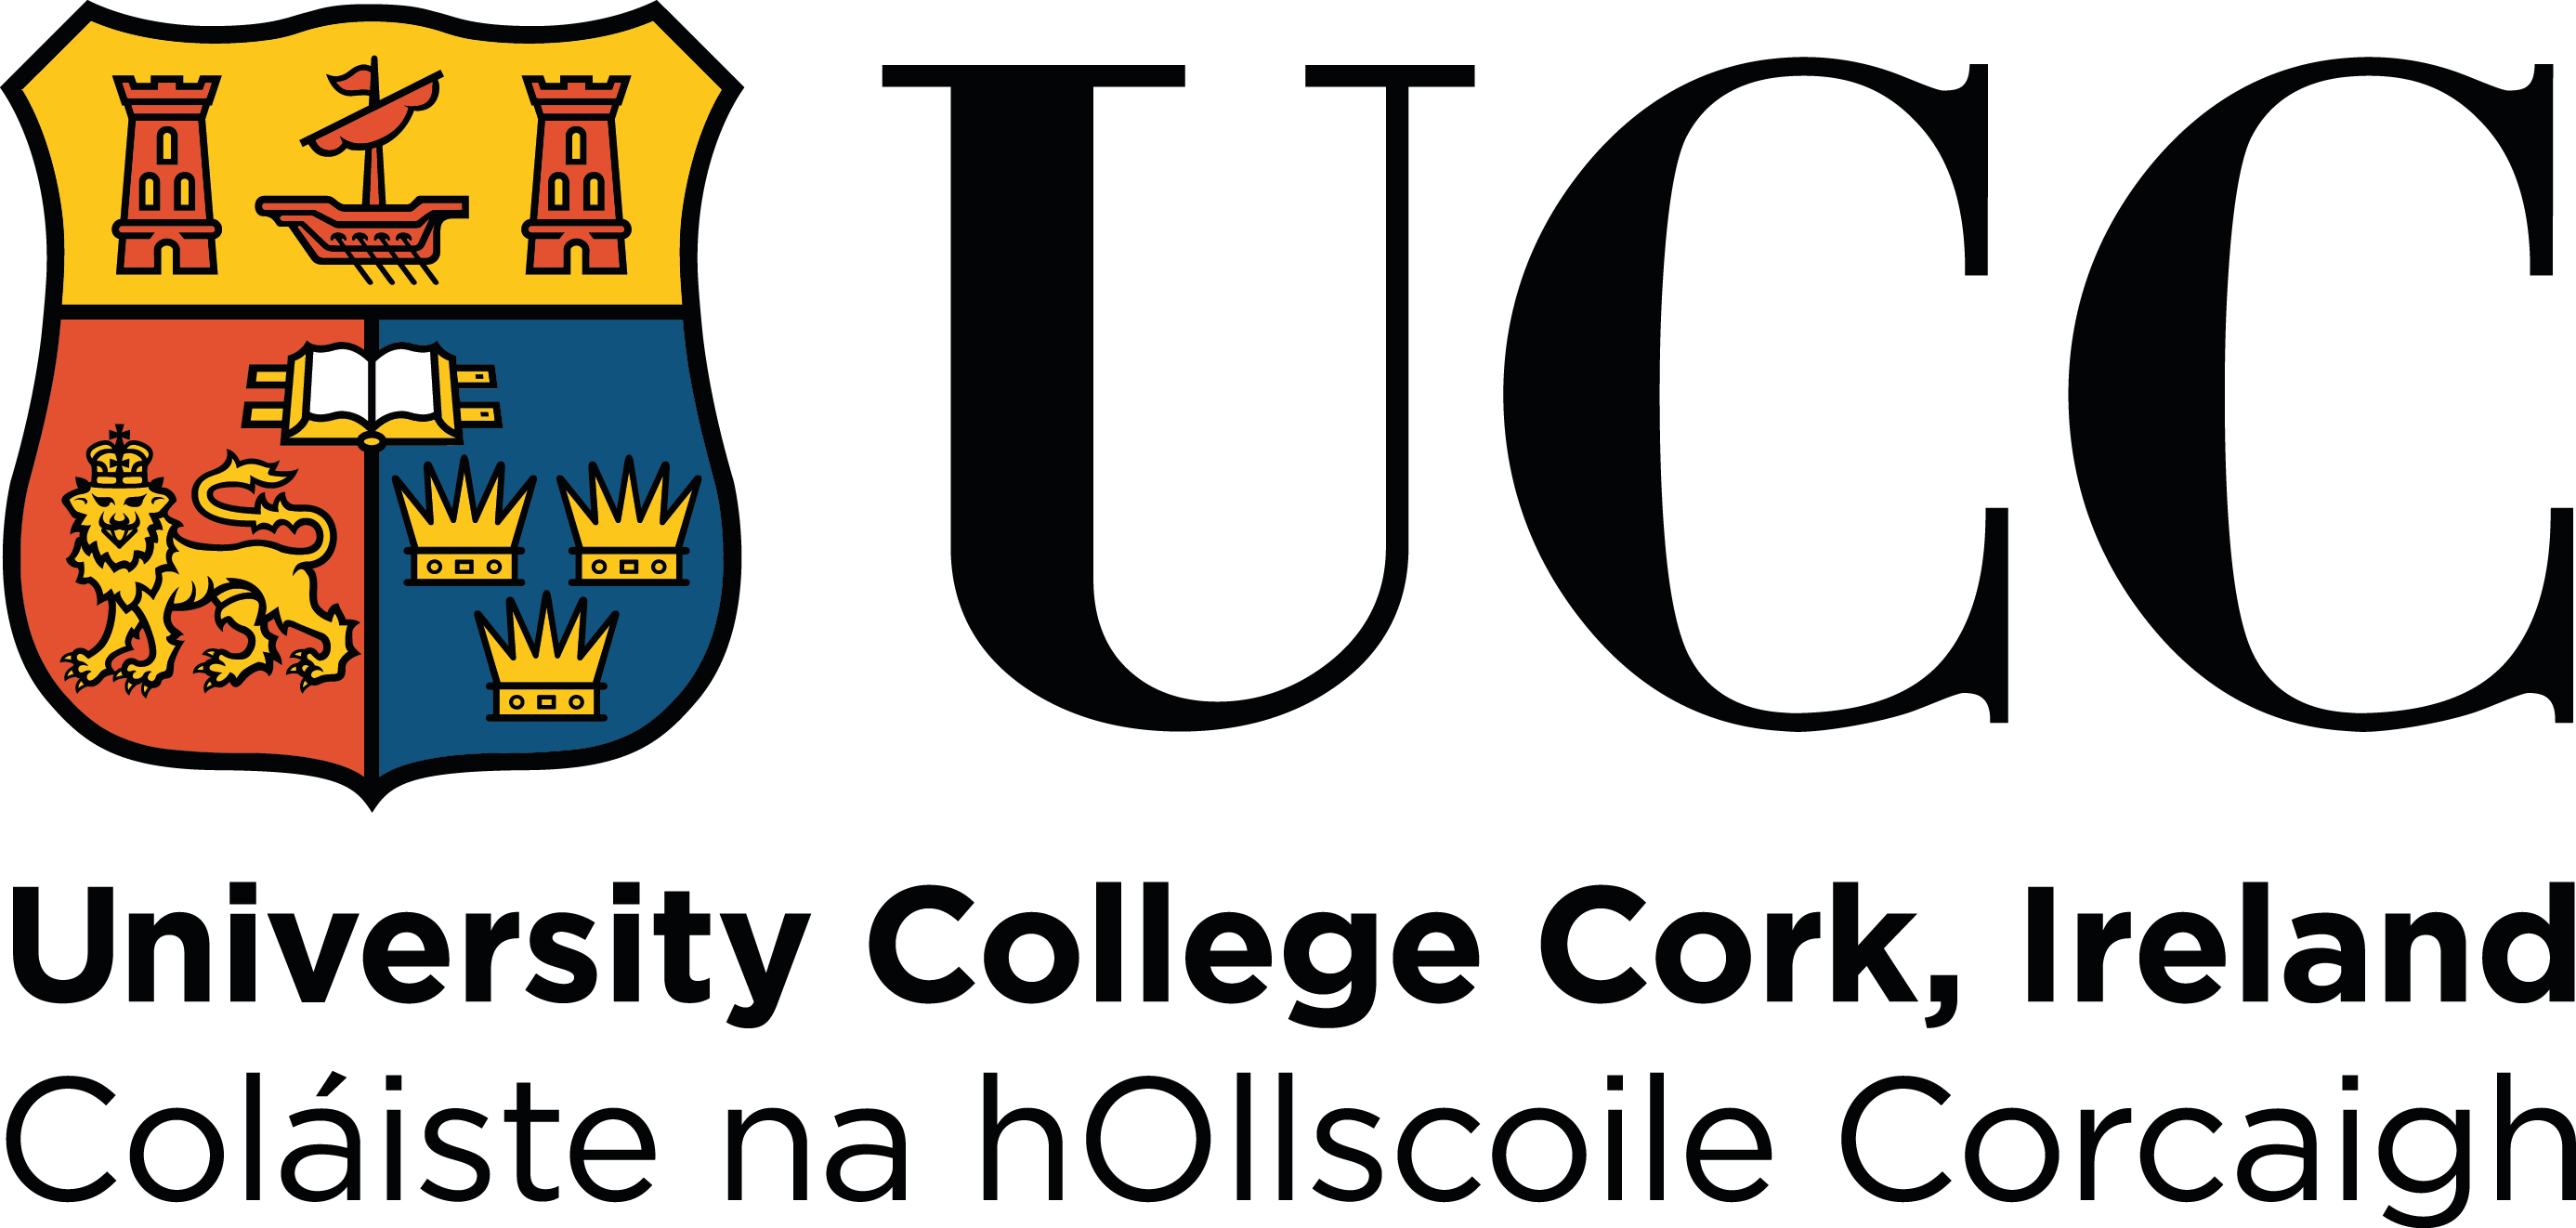 UCC Logo [University College Cork- ucc.ie]